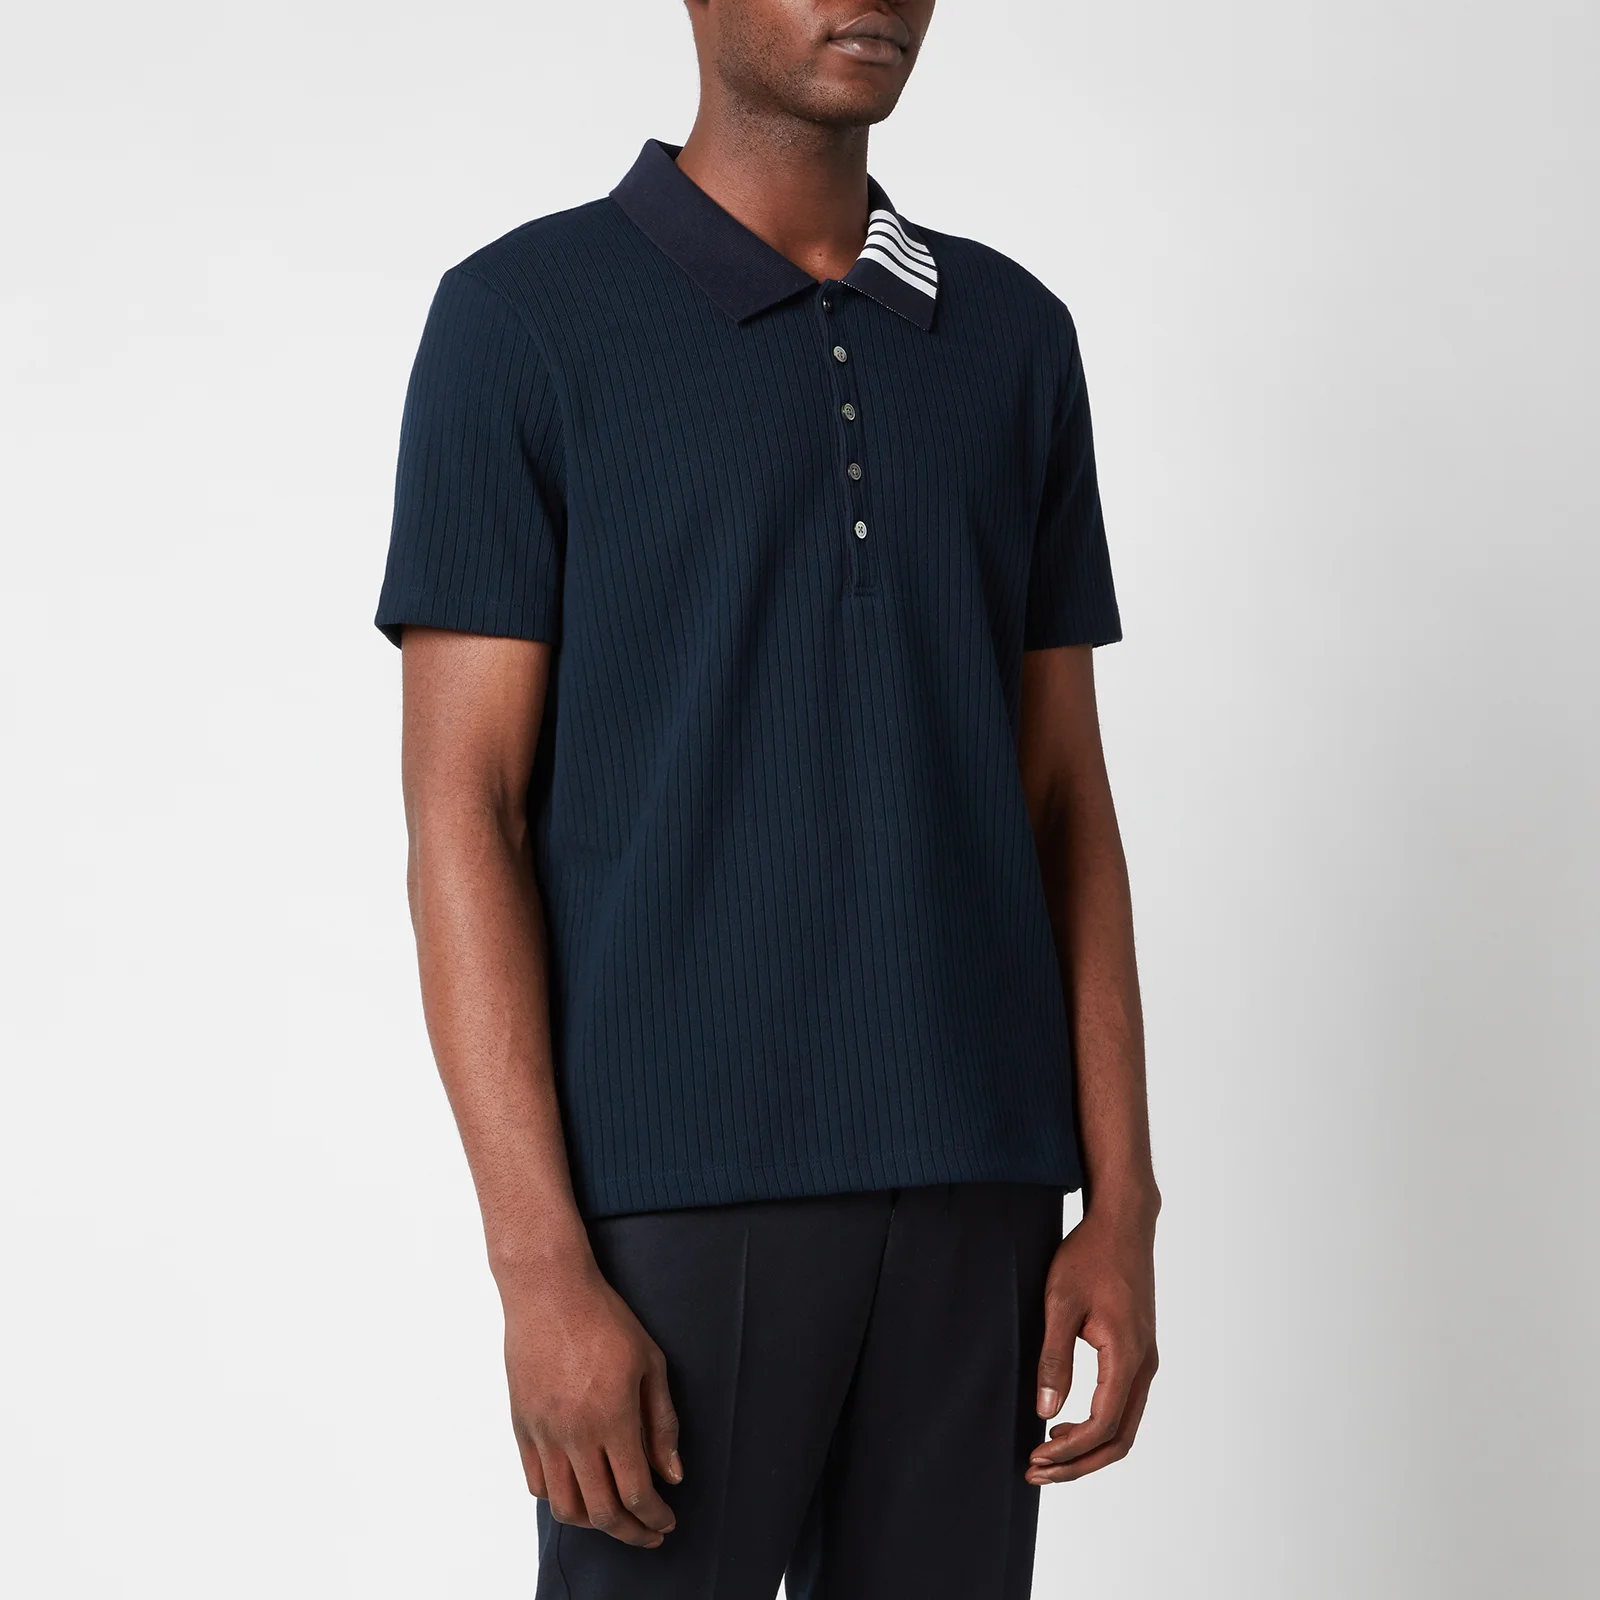 Thom Browne Men's Four-Bar Collar Polo Shirt - Navy Image 1